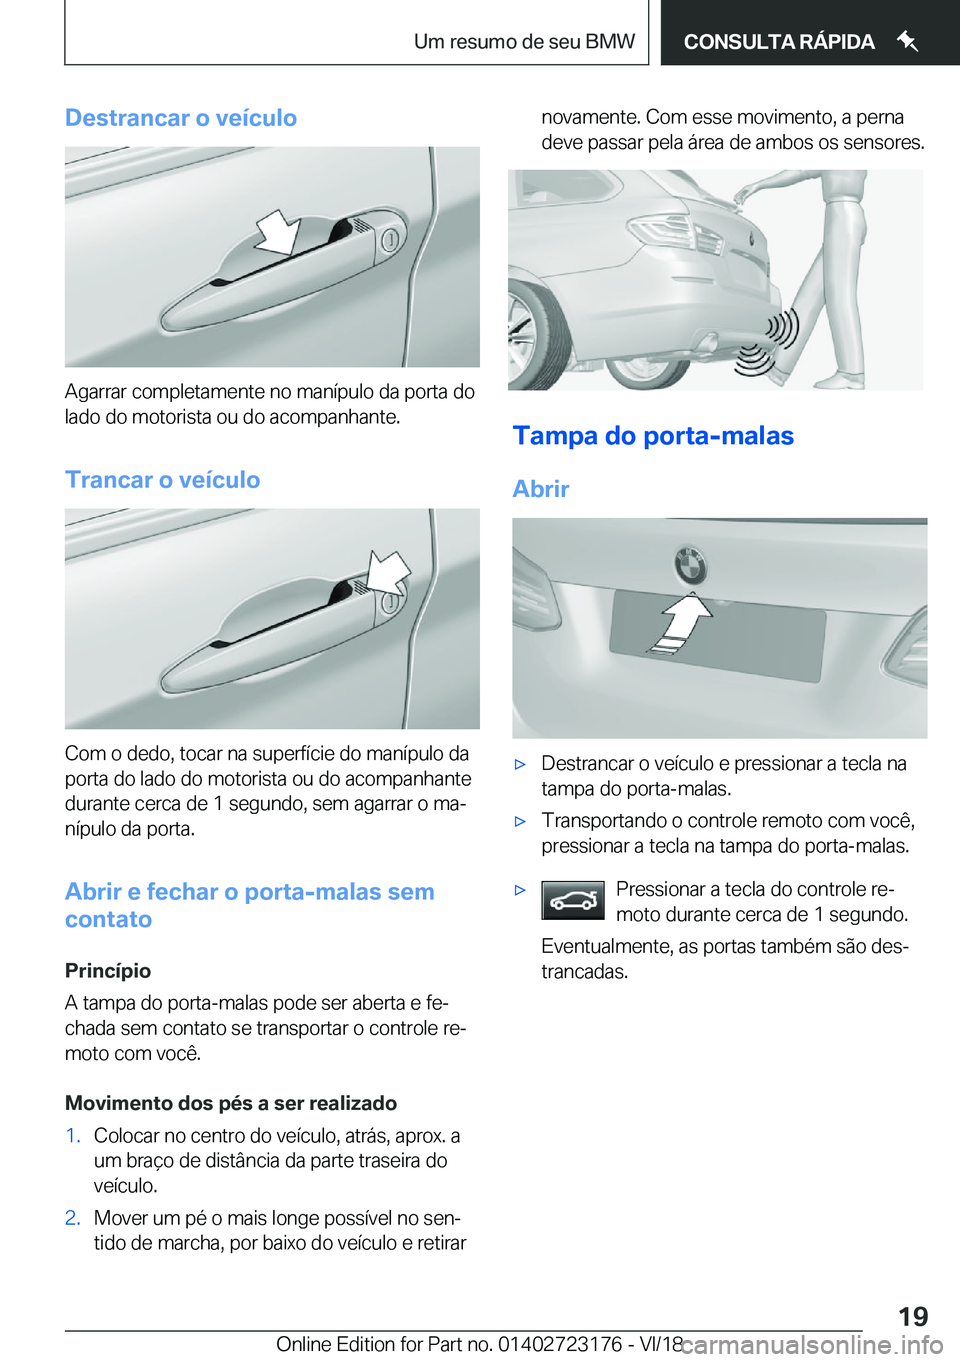 BMW 4 SERIES GRAN COUPE 2019  Manual do condutor (in Portuguese) �D�e�s�t�r�a�n�c�a�r��o��v�e�